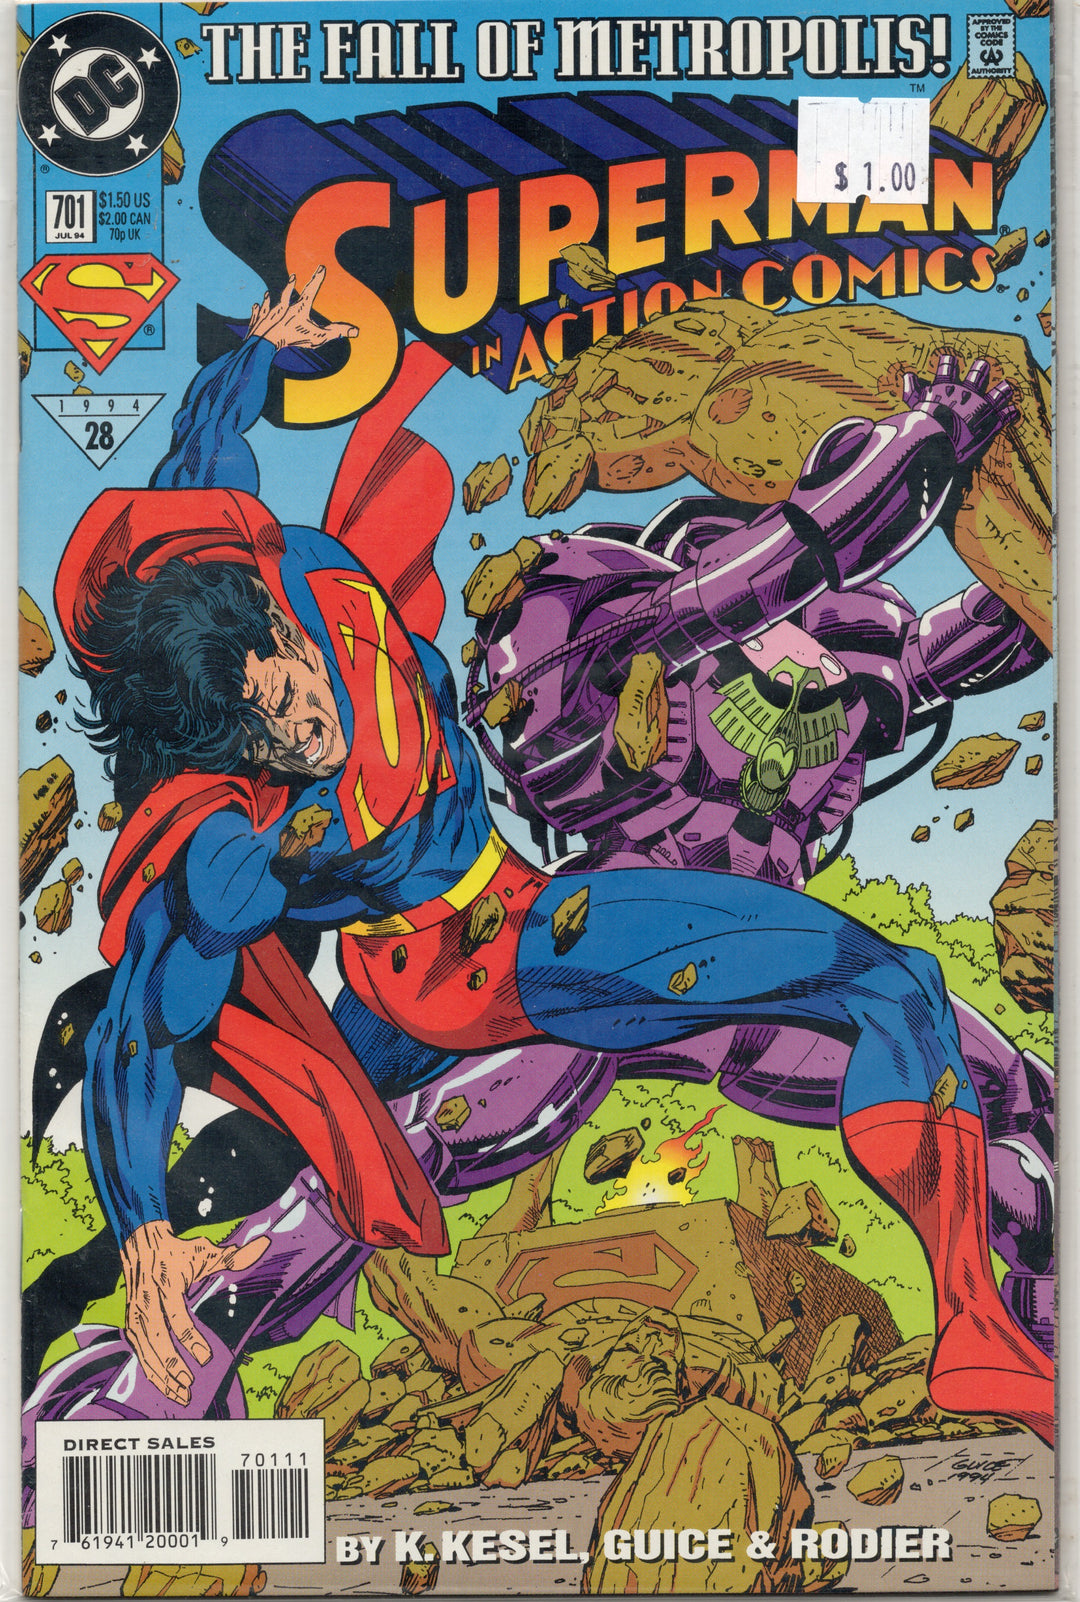 Superman Action Comics #701